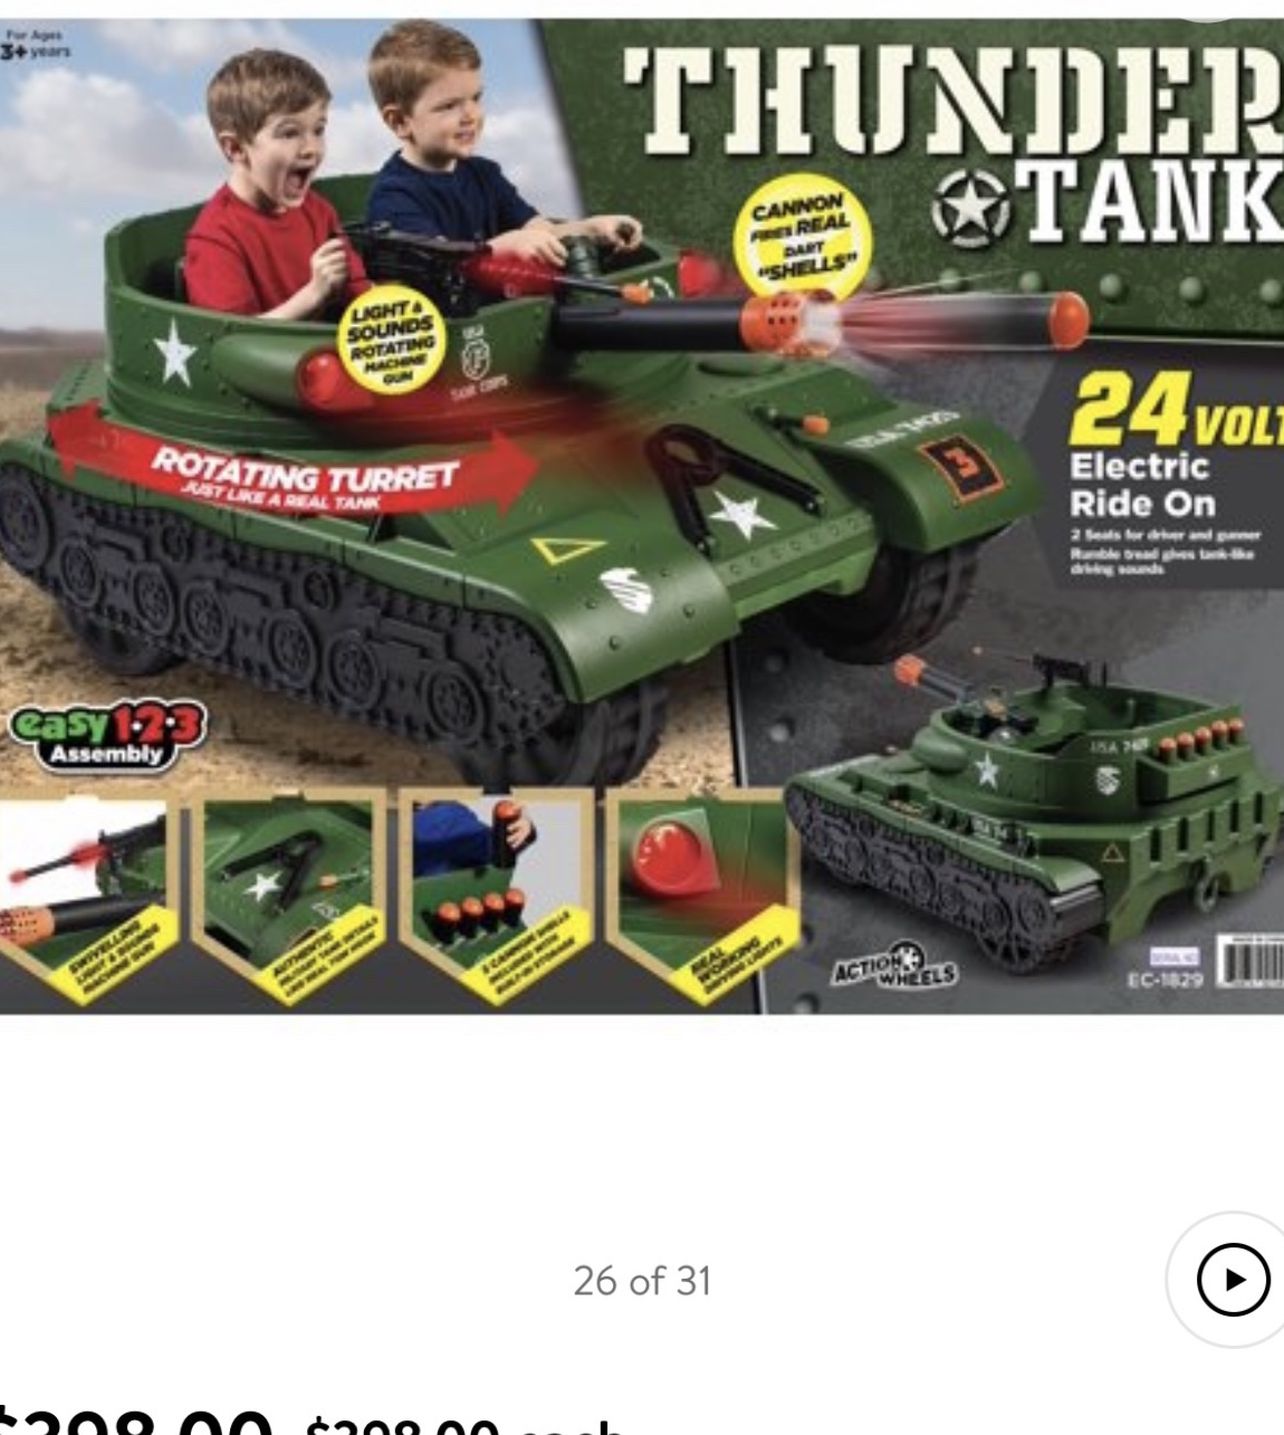 Thunder Tank Ride On